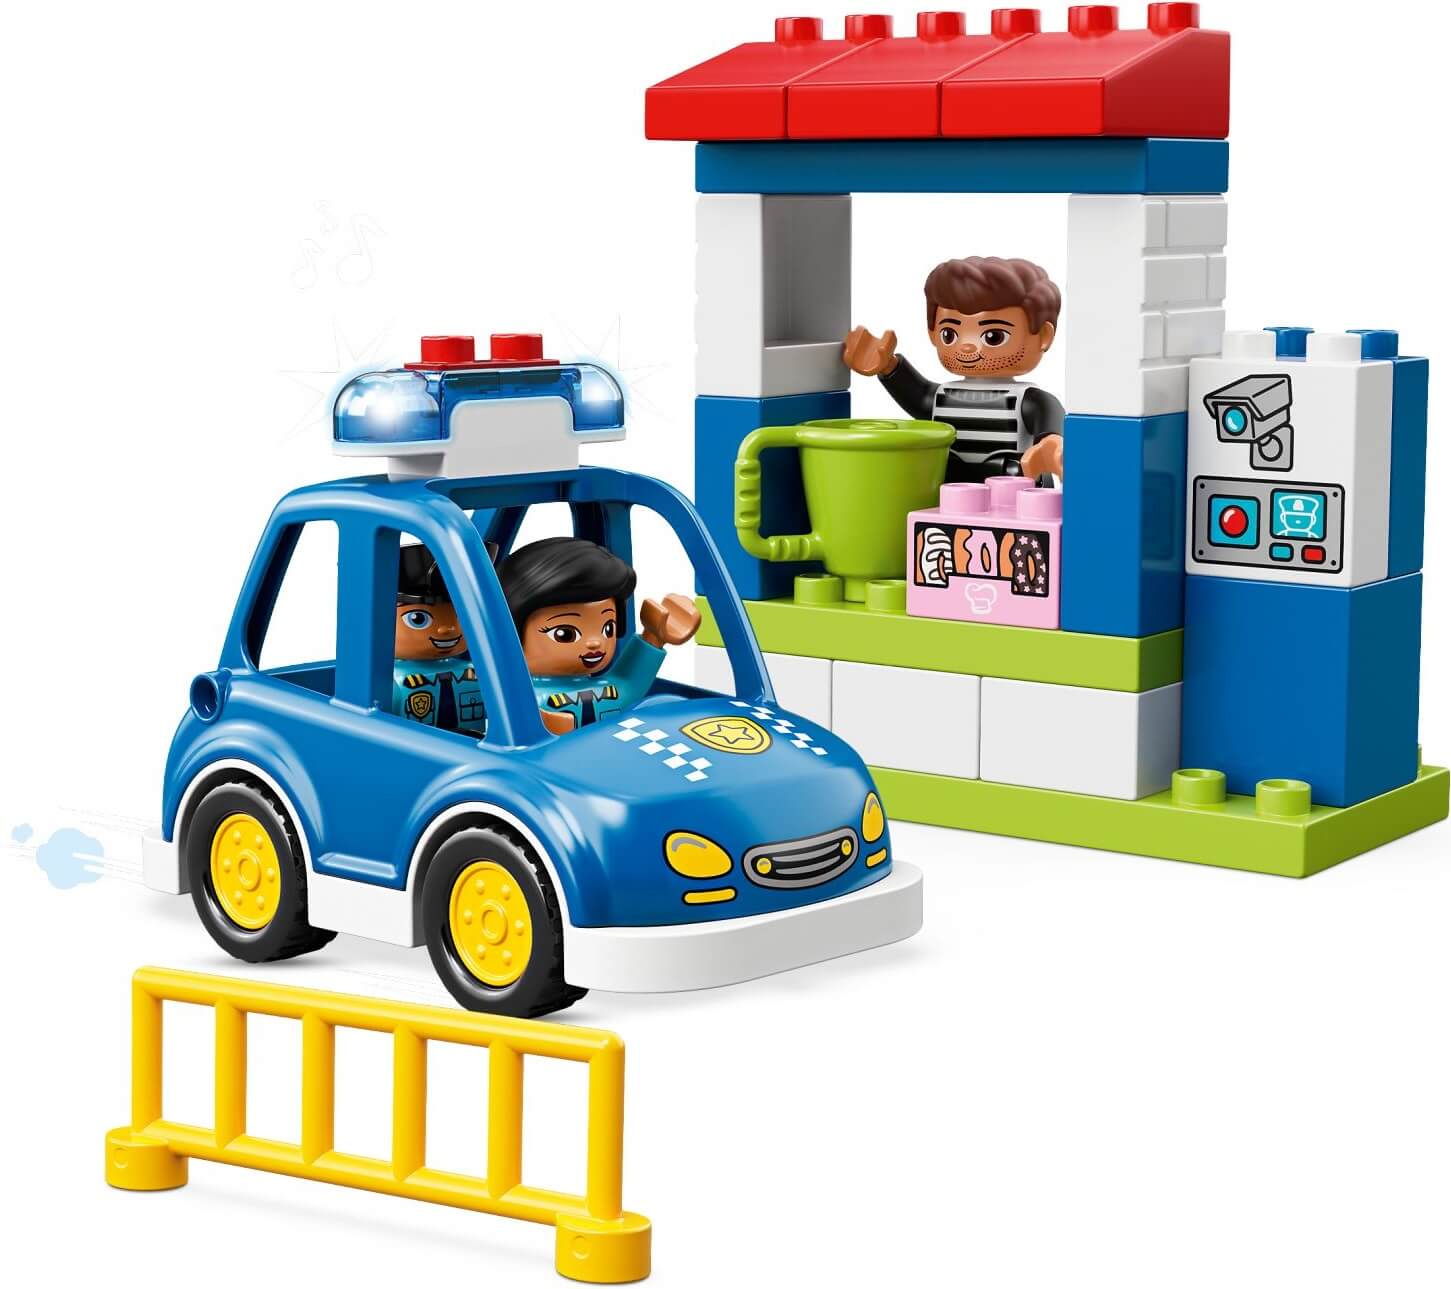 Comisaria de Policia Duplo ( Lego 10902 ) imagen b